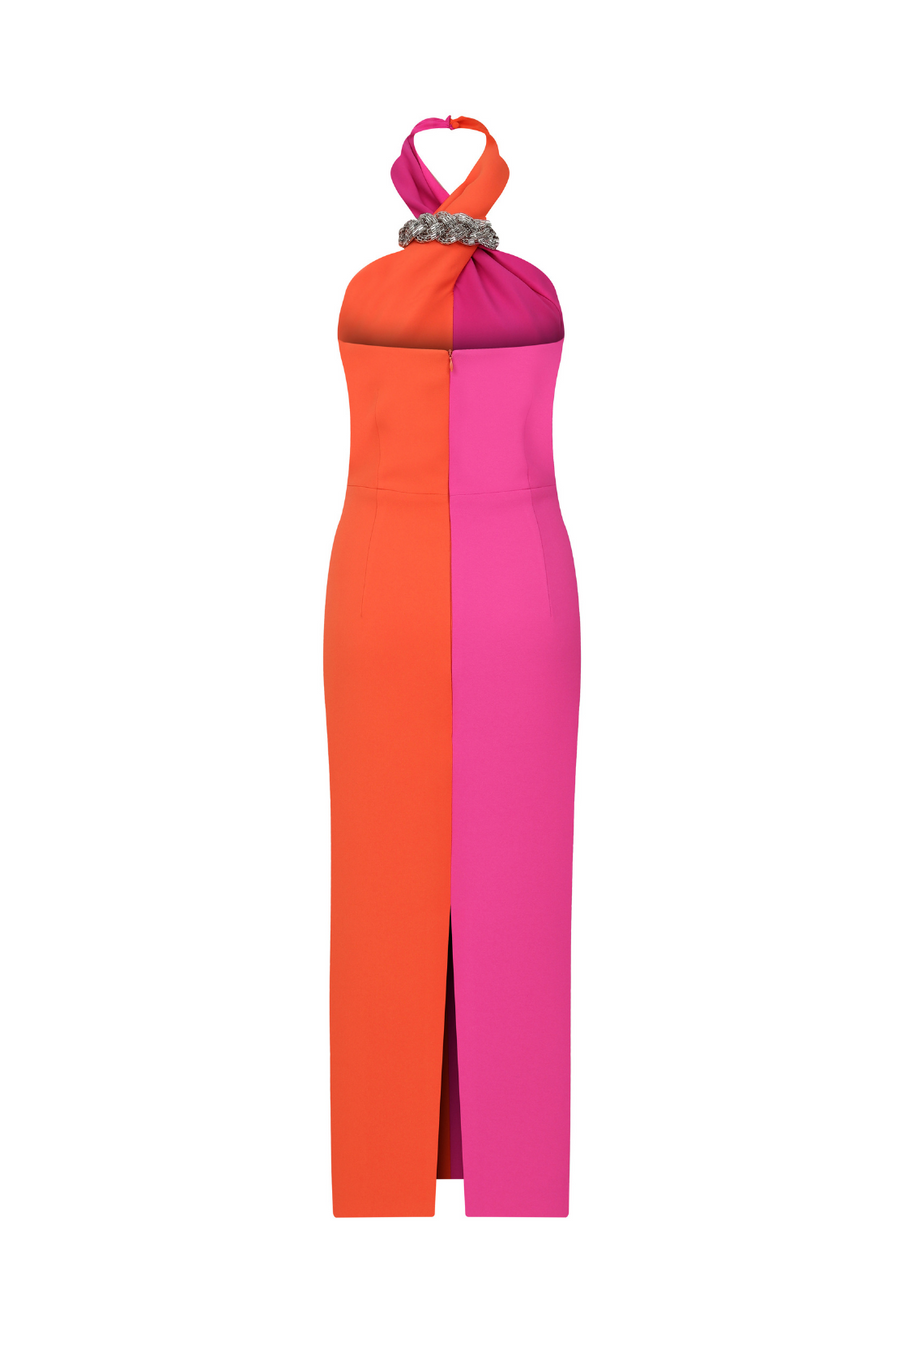 Dual Pink Orange Crepe Dress